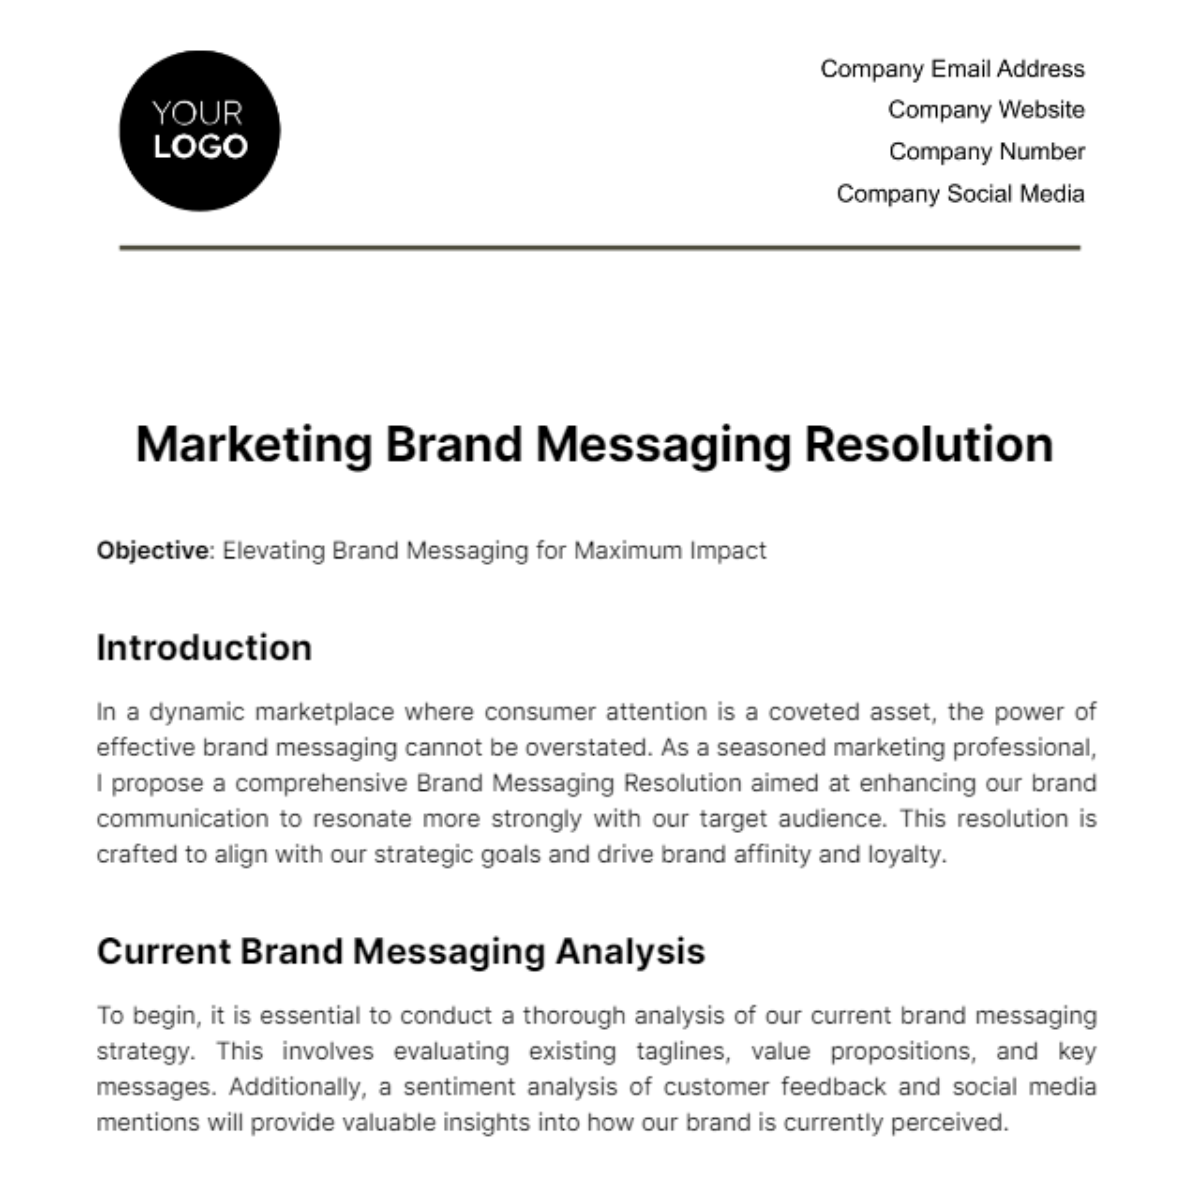 Marketing Brand Messaging Resolution Template